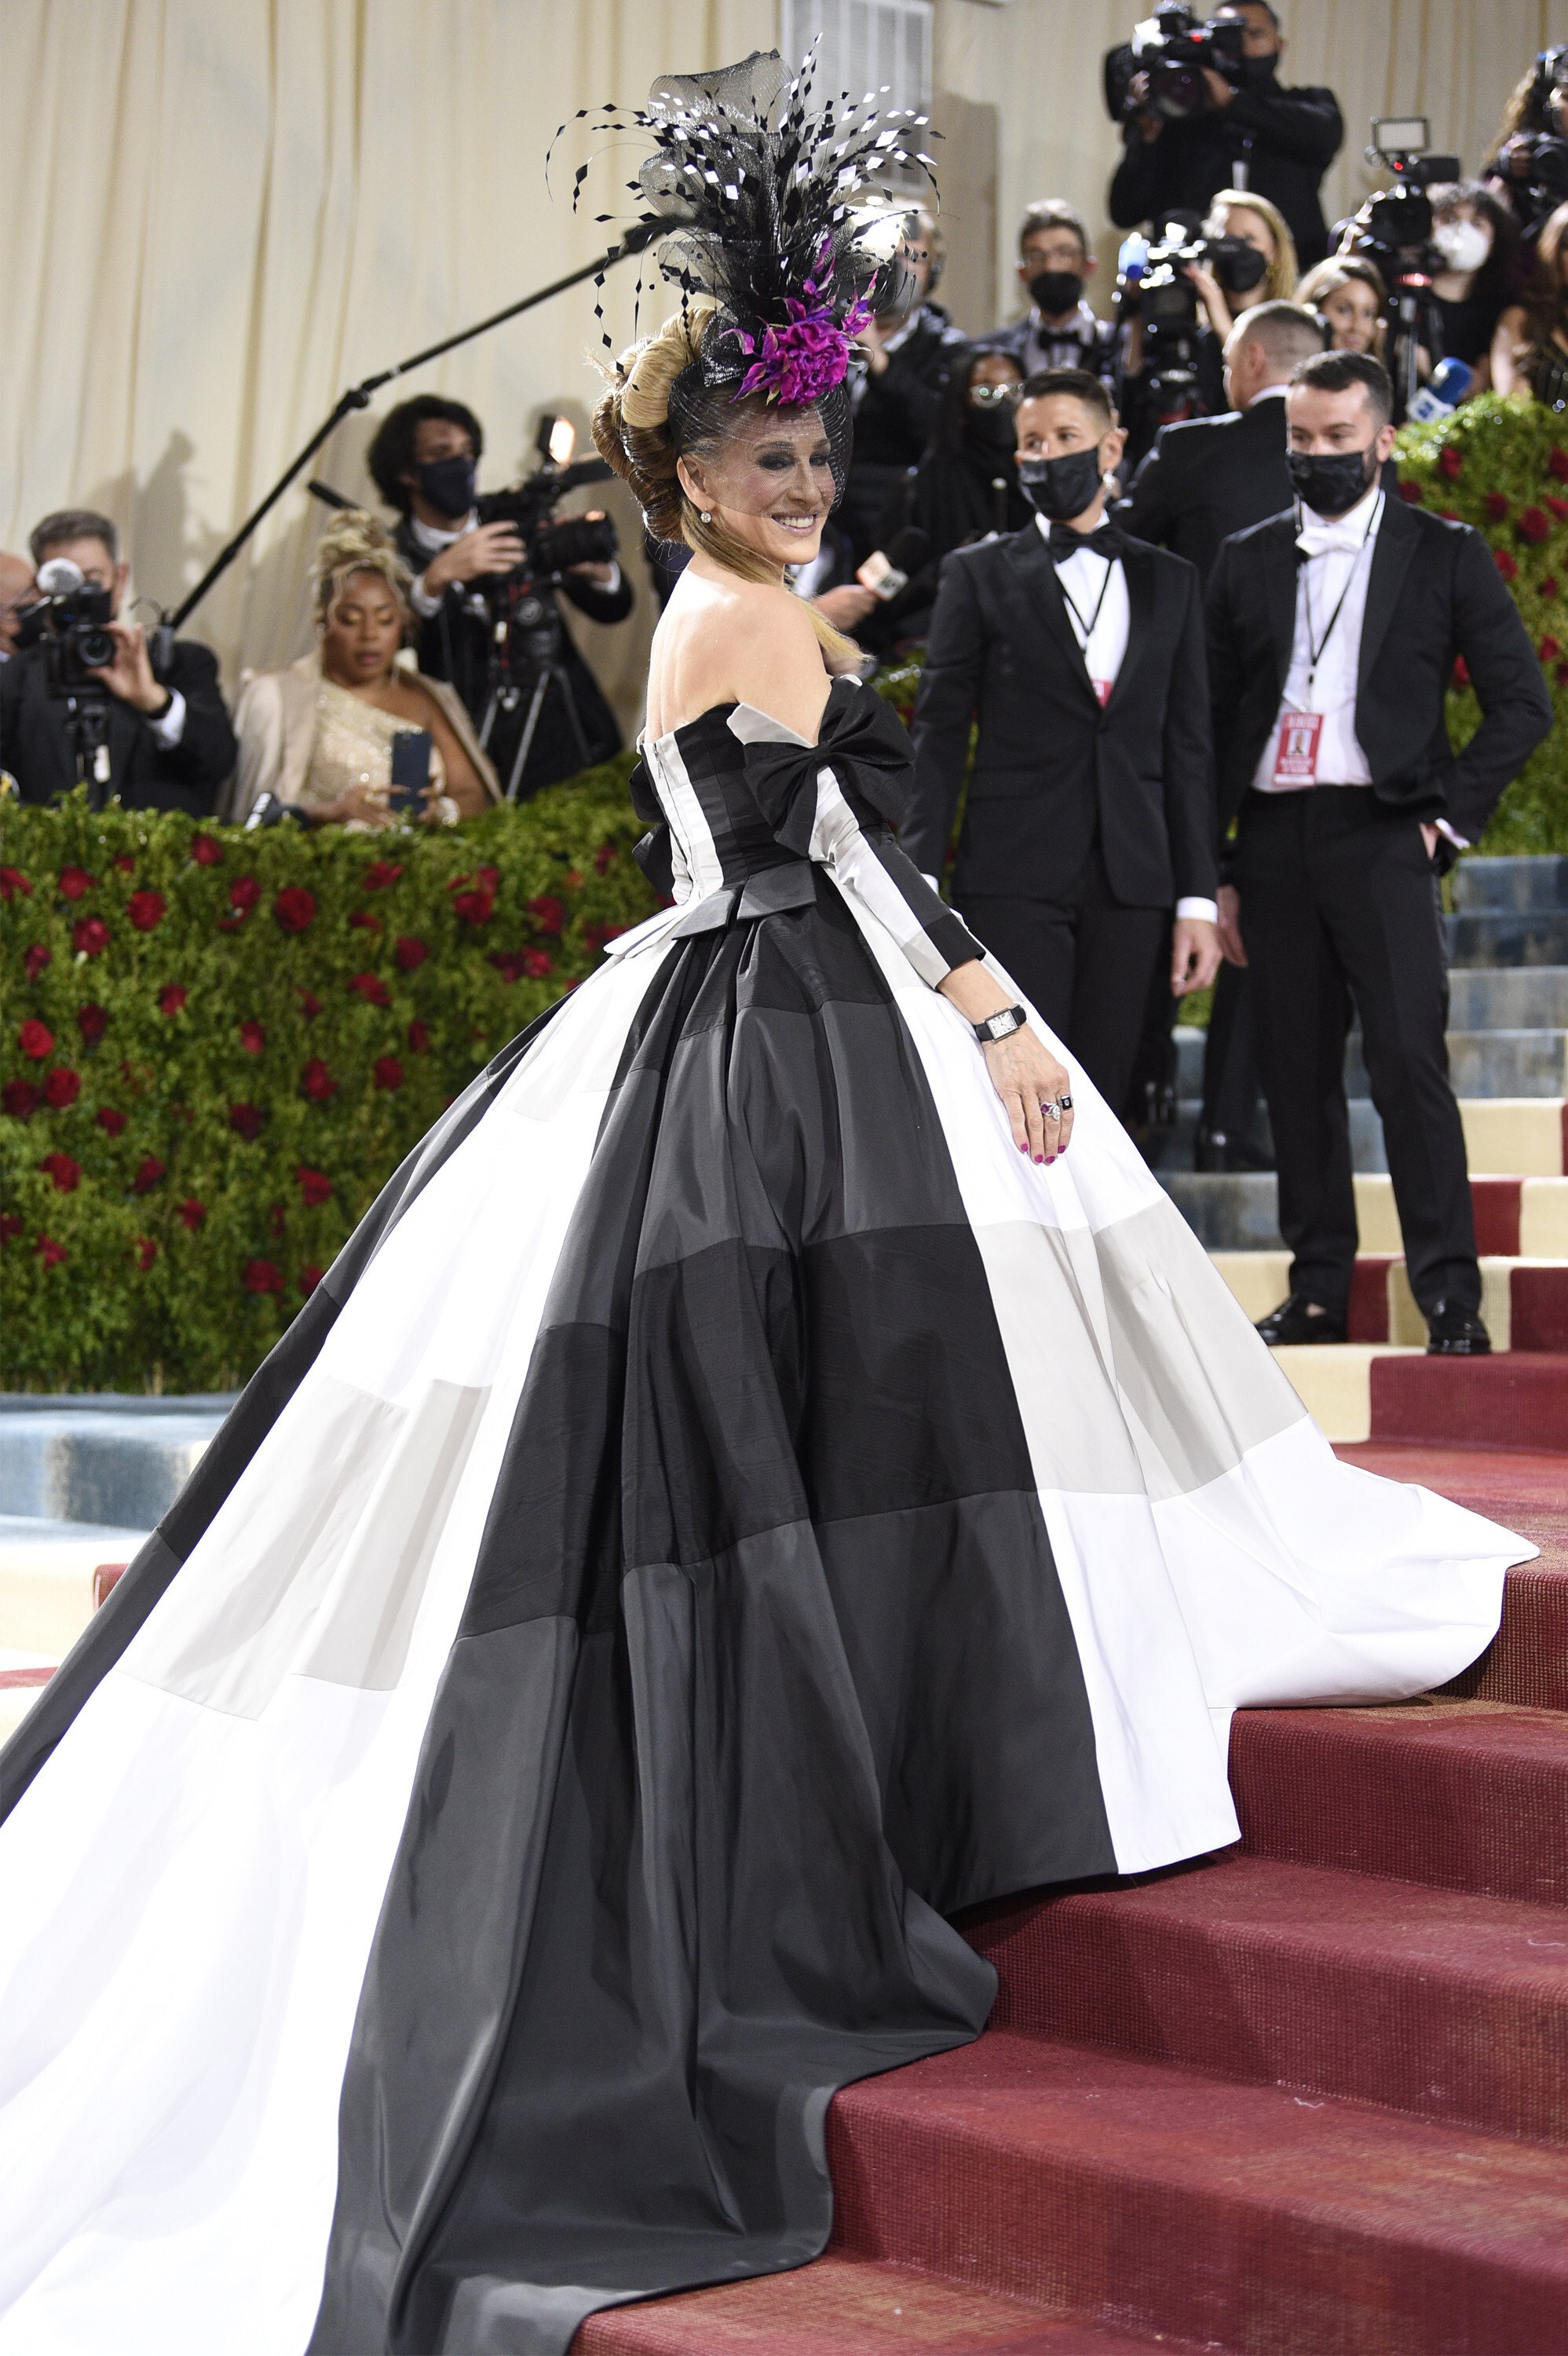 Met Gala 2022: Emma Stone Wore One of Her Wedding Dresses